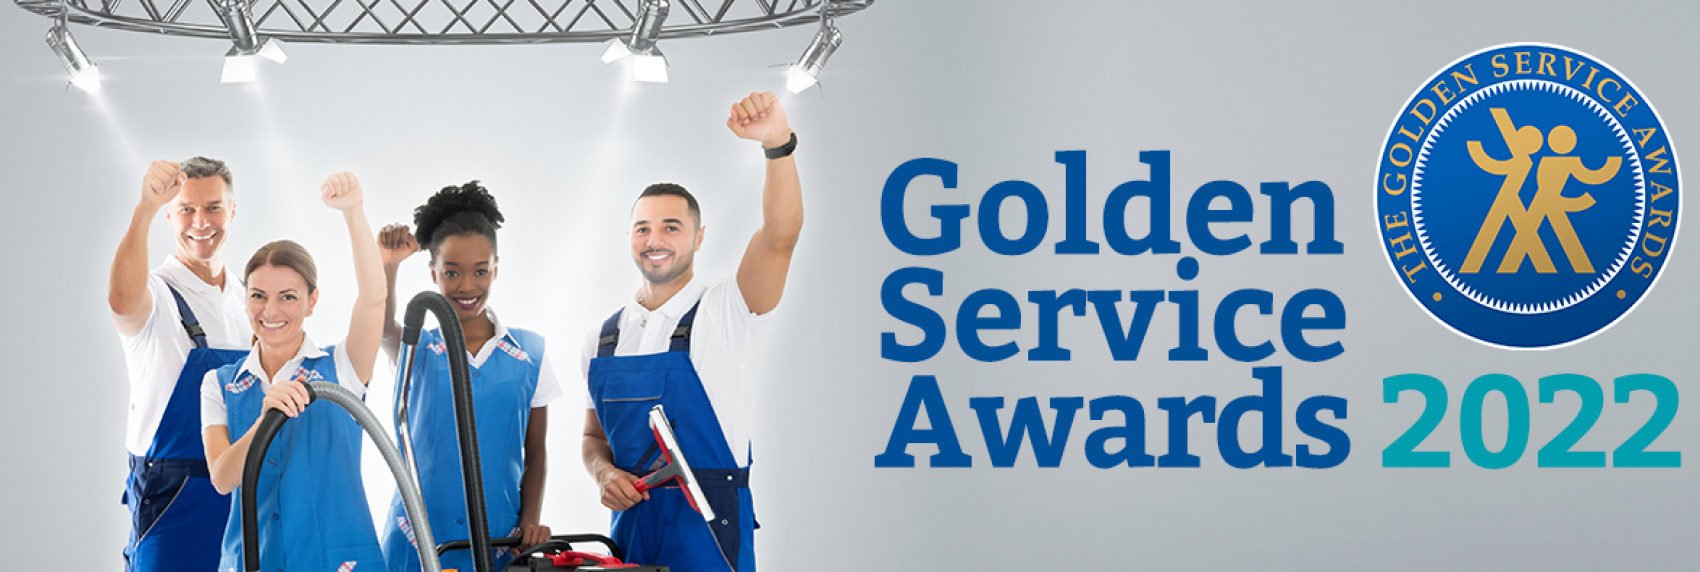 Openingsbeeld Golden Service Awards